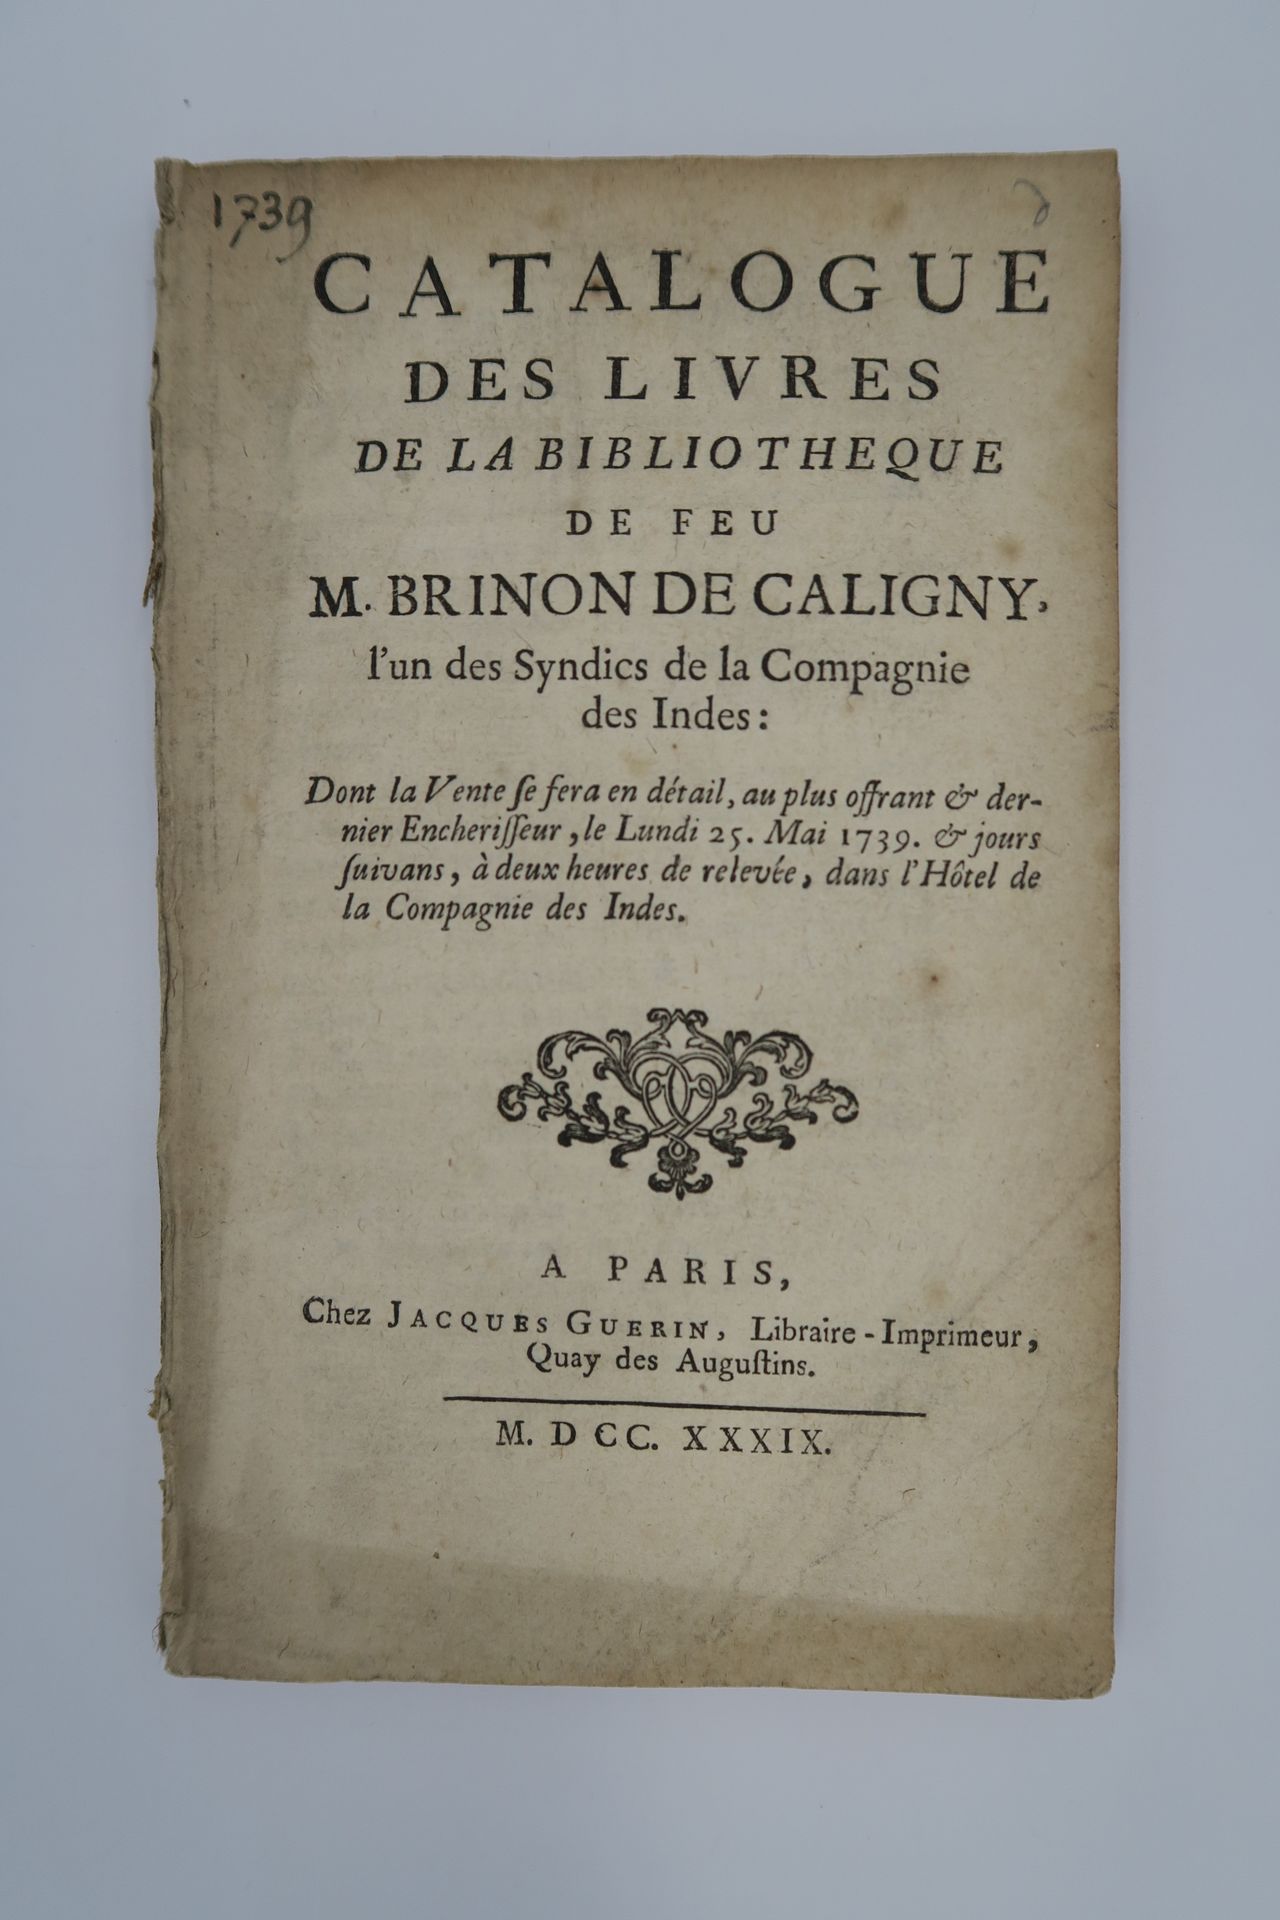 Null [图书馆目录]。已故布里农-德-卡里尼先生的图书馆书籍目录，他是印度公司的联合创始人之一：将于1739年5月25日星期一及随后几天的下午两点，在巴黎雅&hellip;